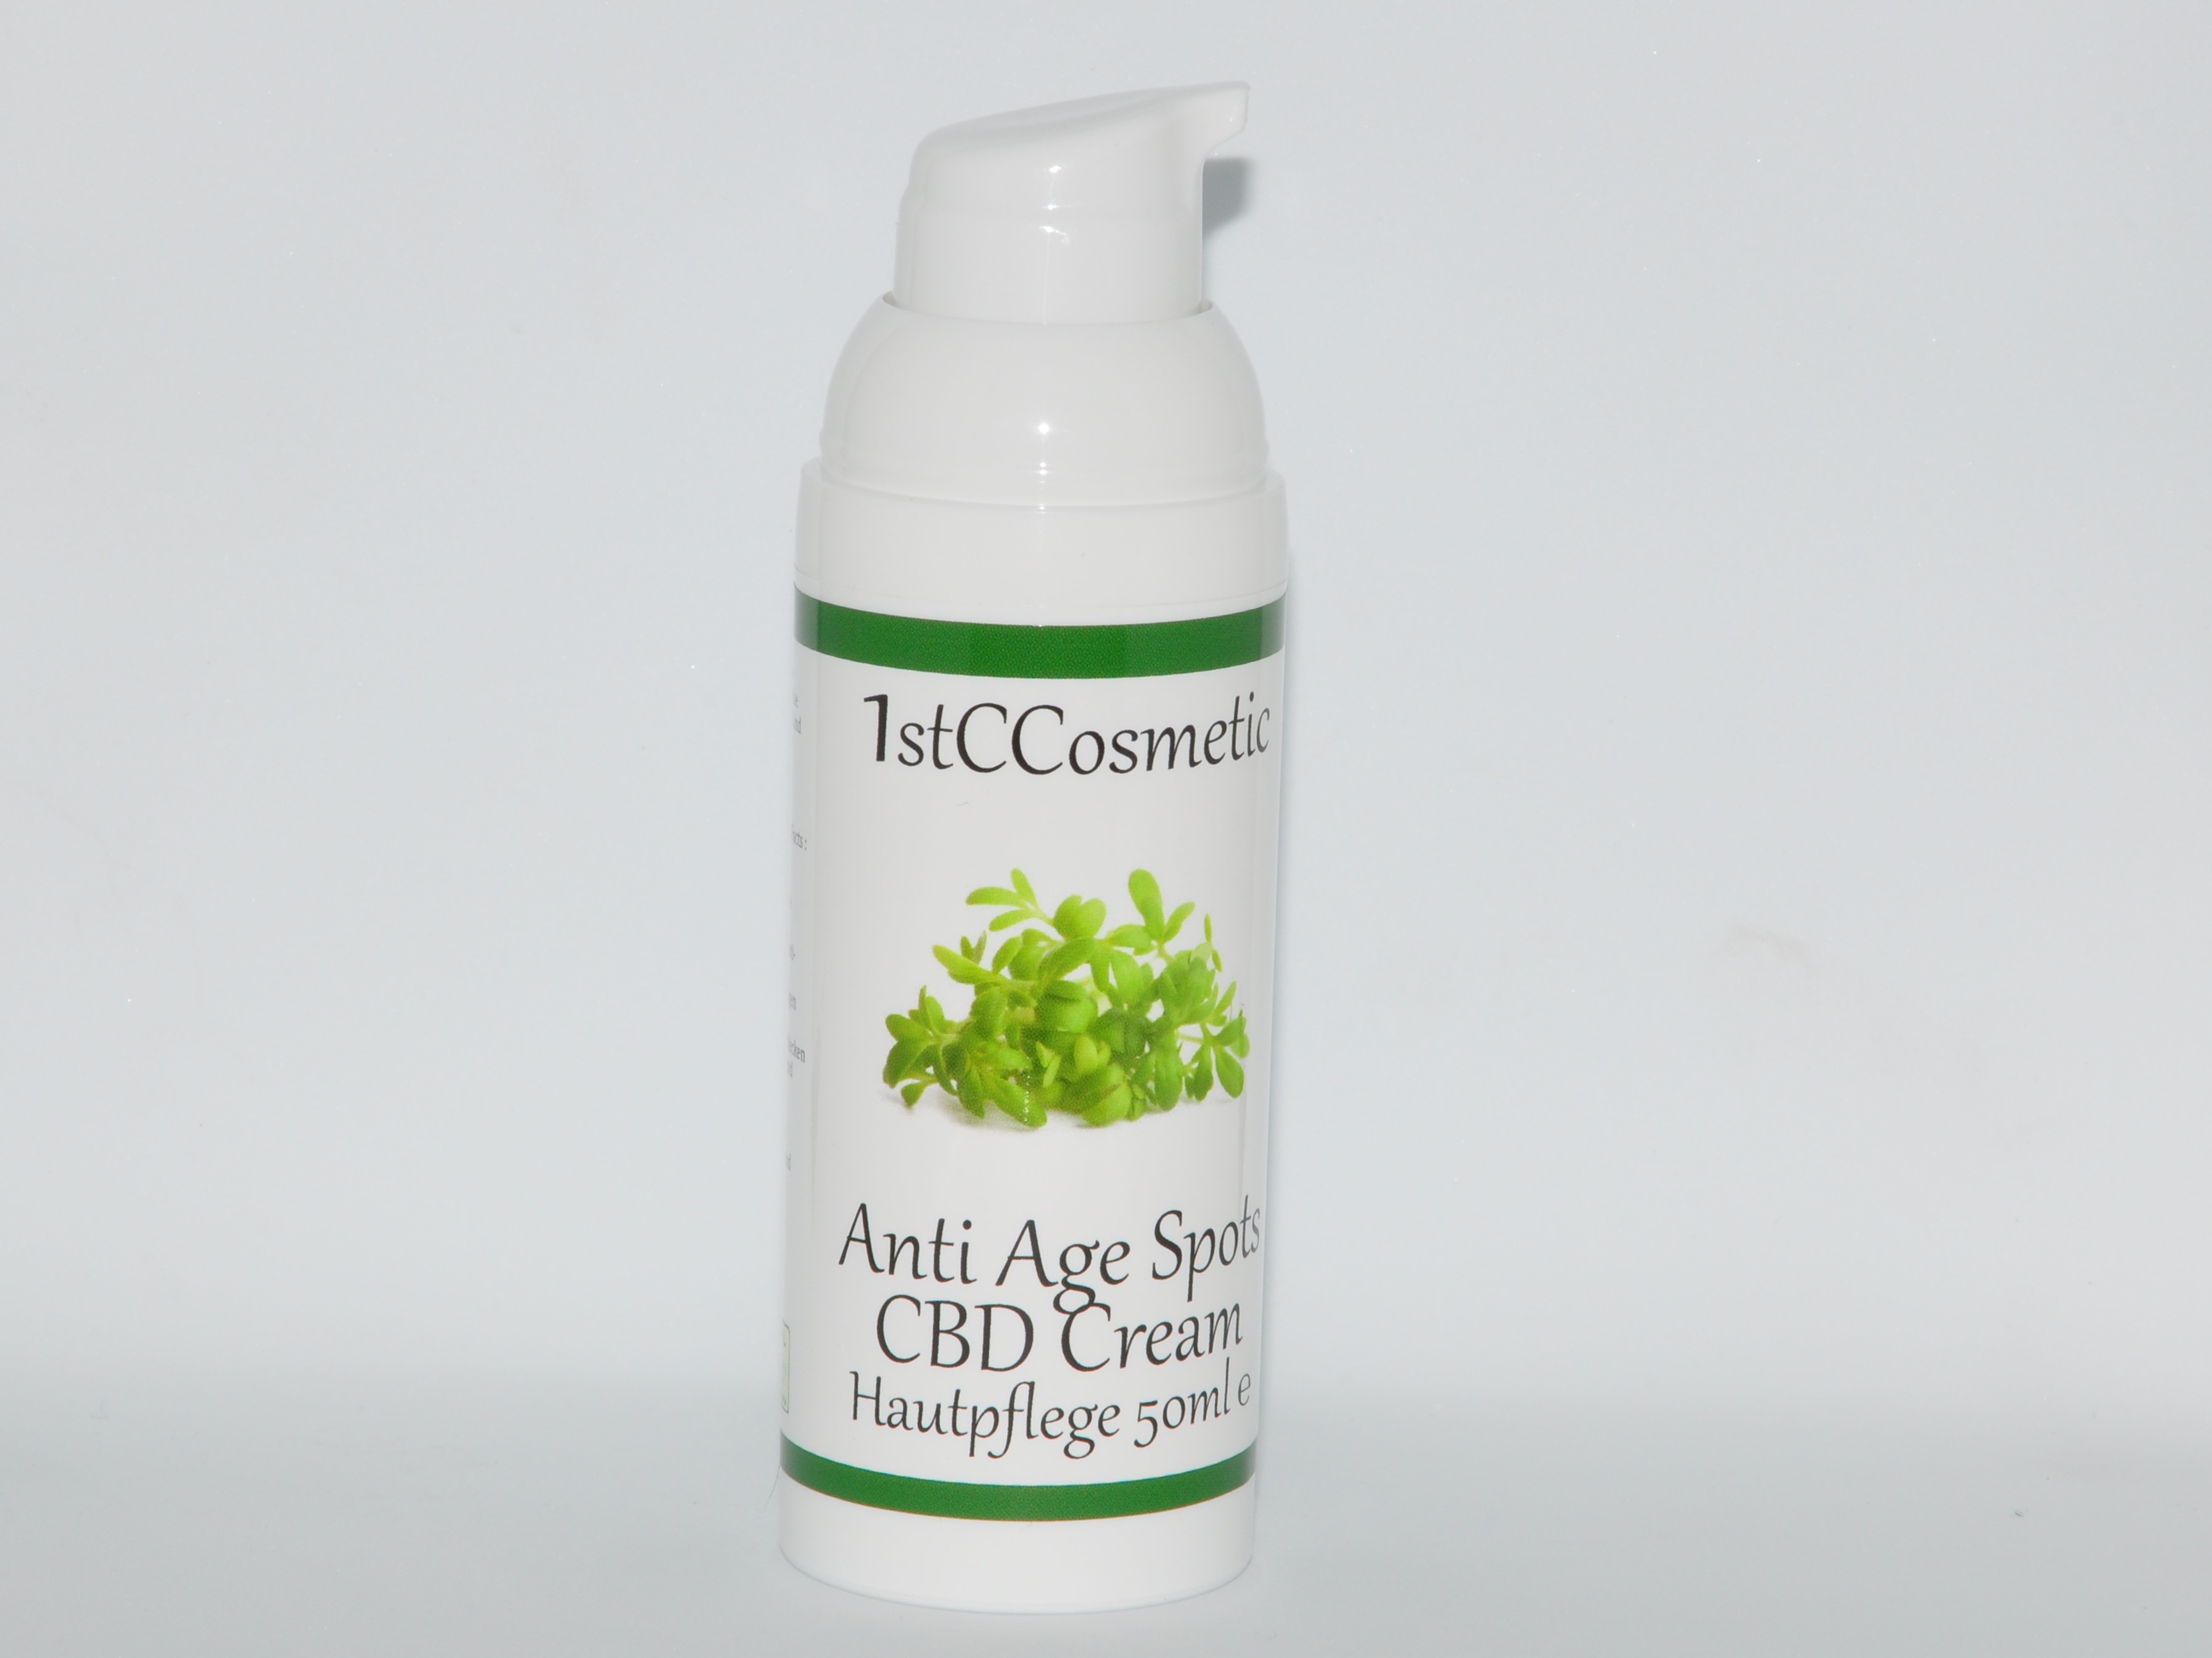 1stCCosmetic Anti Age Spots CBD Cream